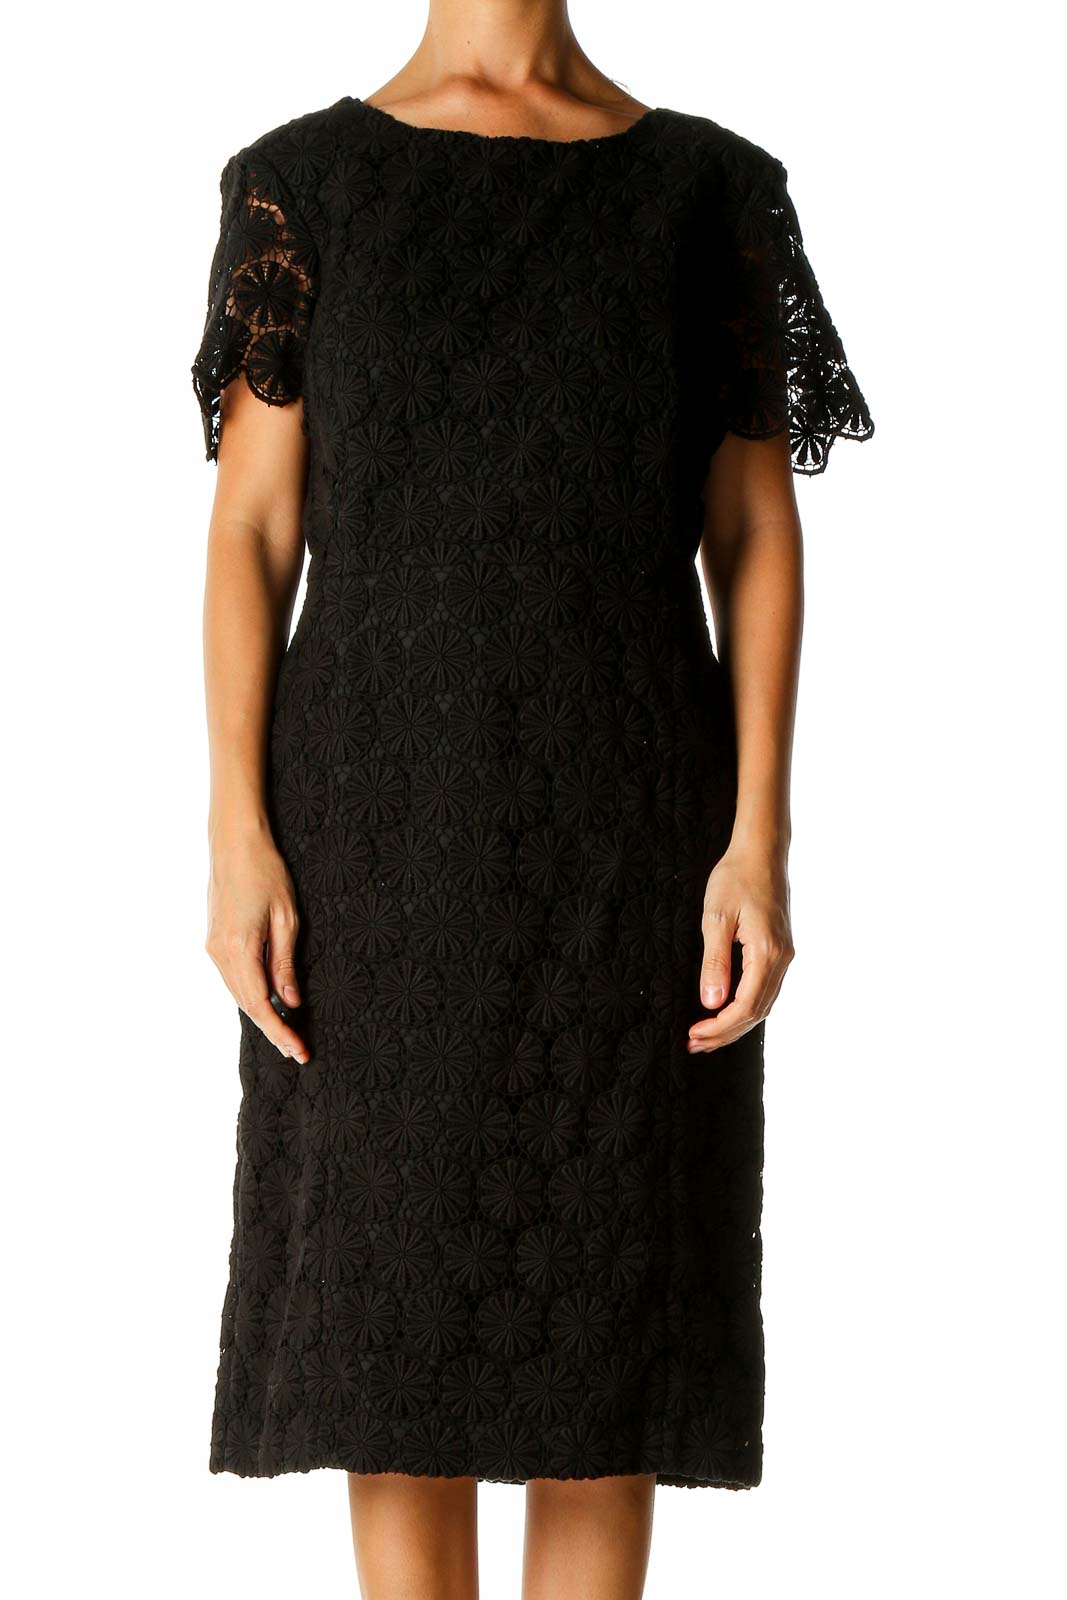 Black Lace Classic Sheath Dress Front